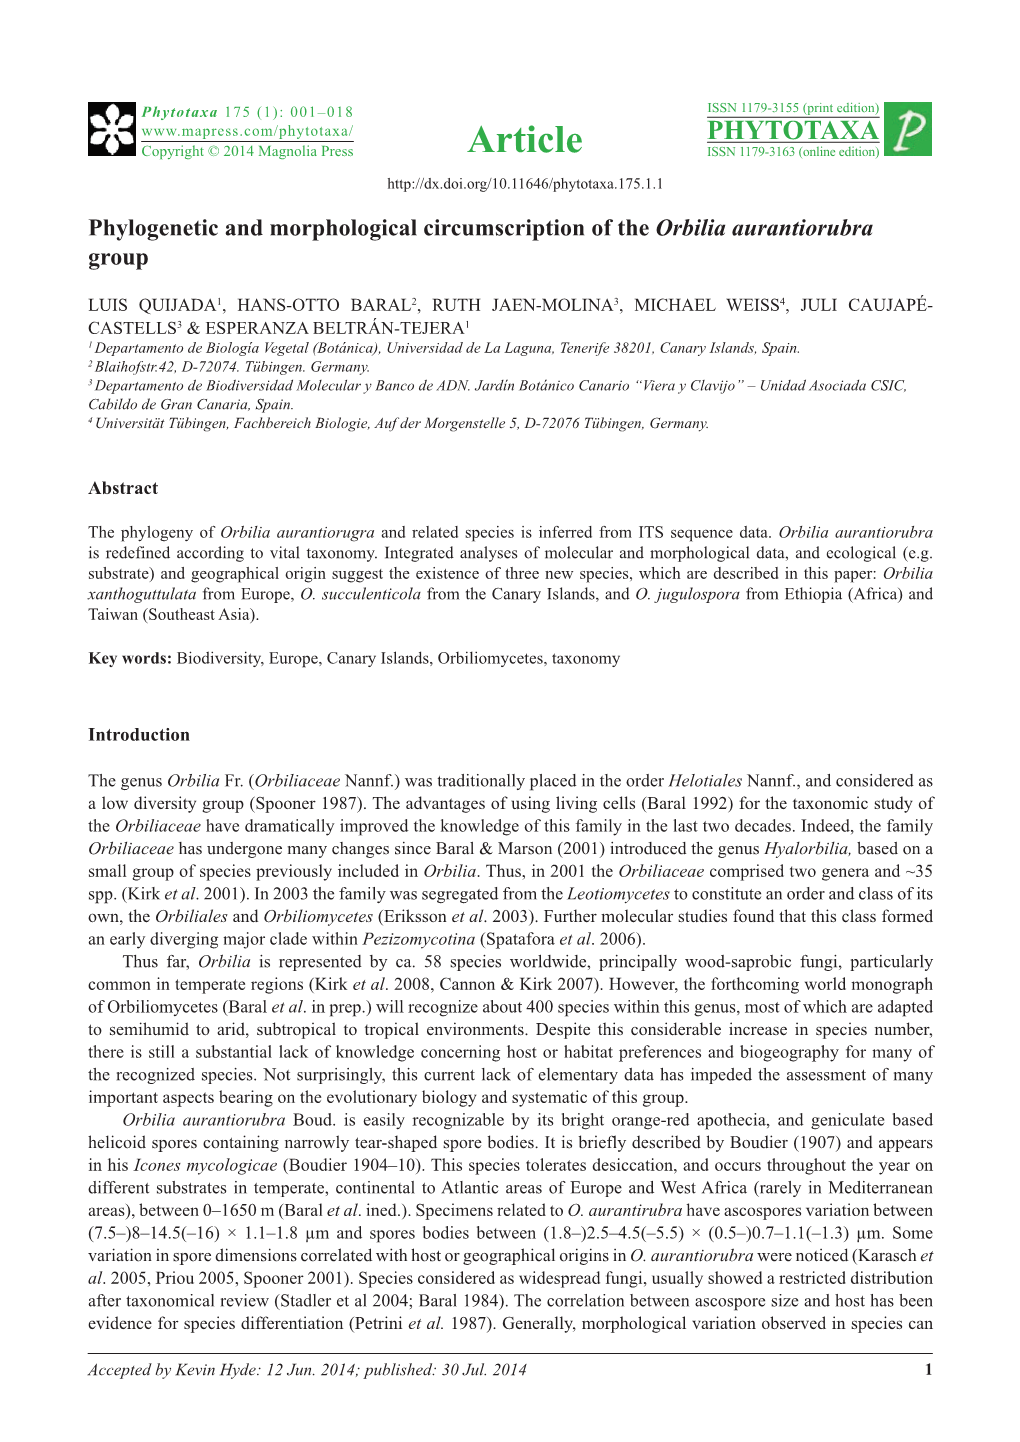 Phylogenetic and Morphological Circumscription of the Orbilia Aurantiorubra Group